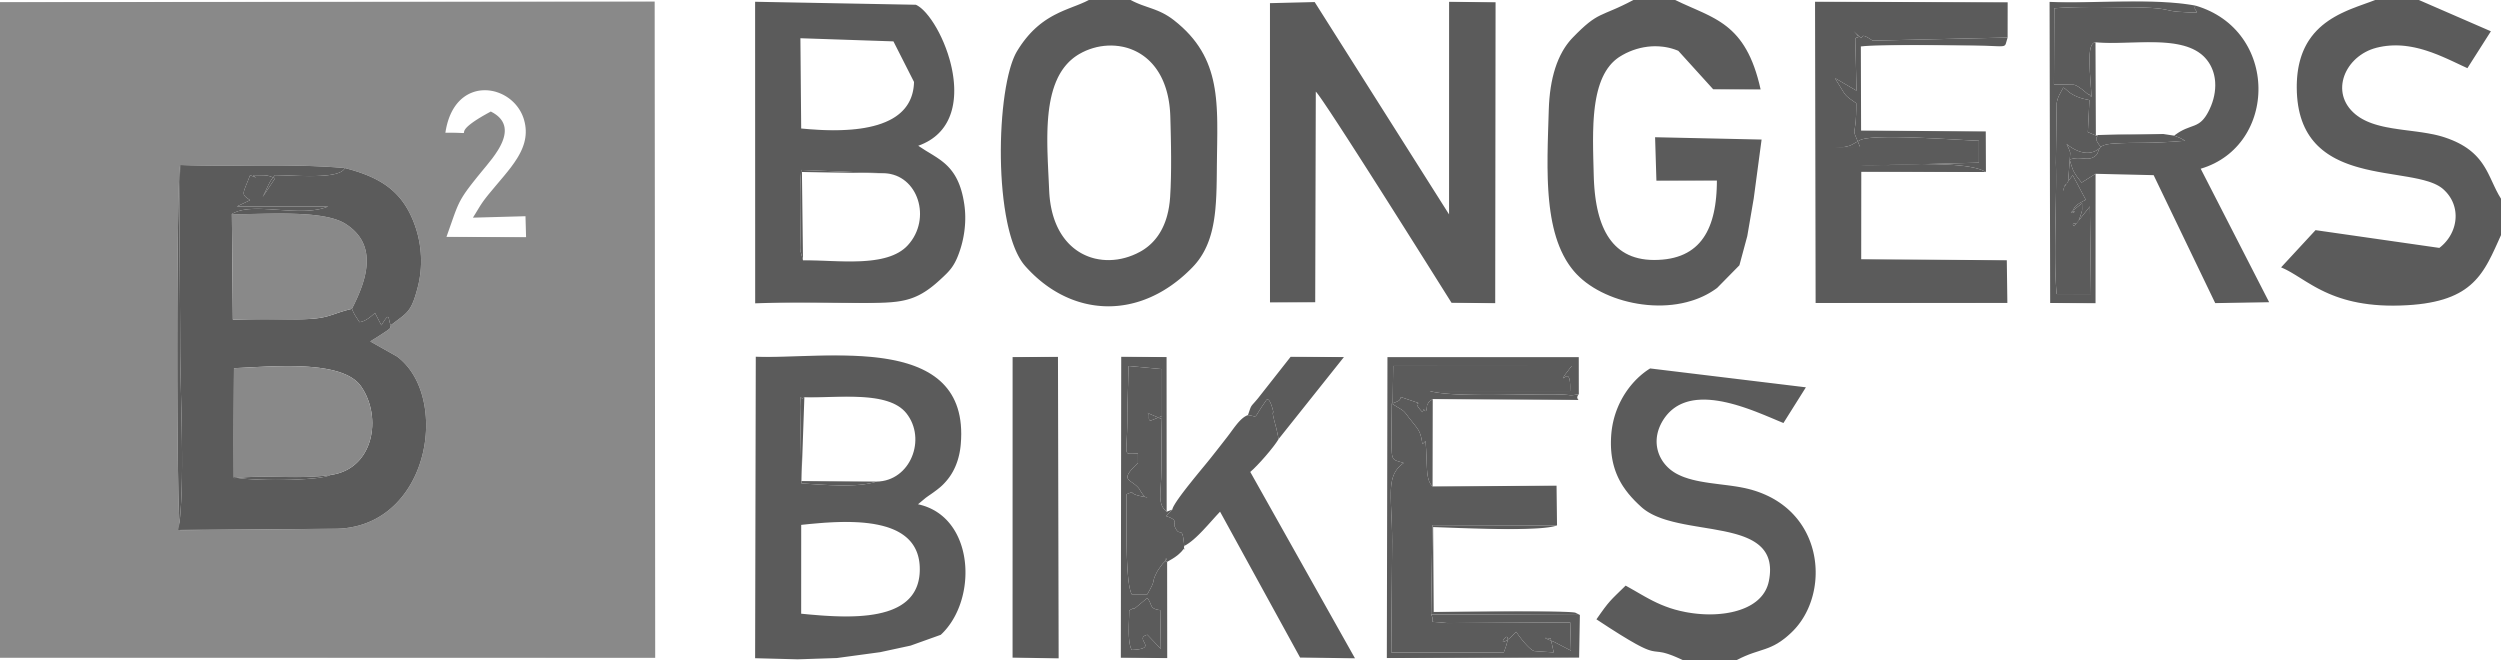 logo bongers bikes